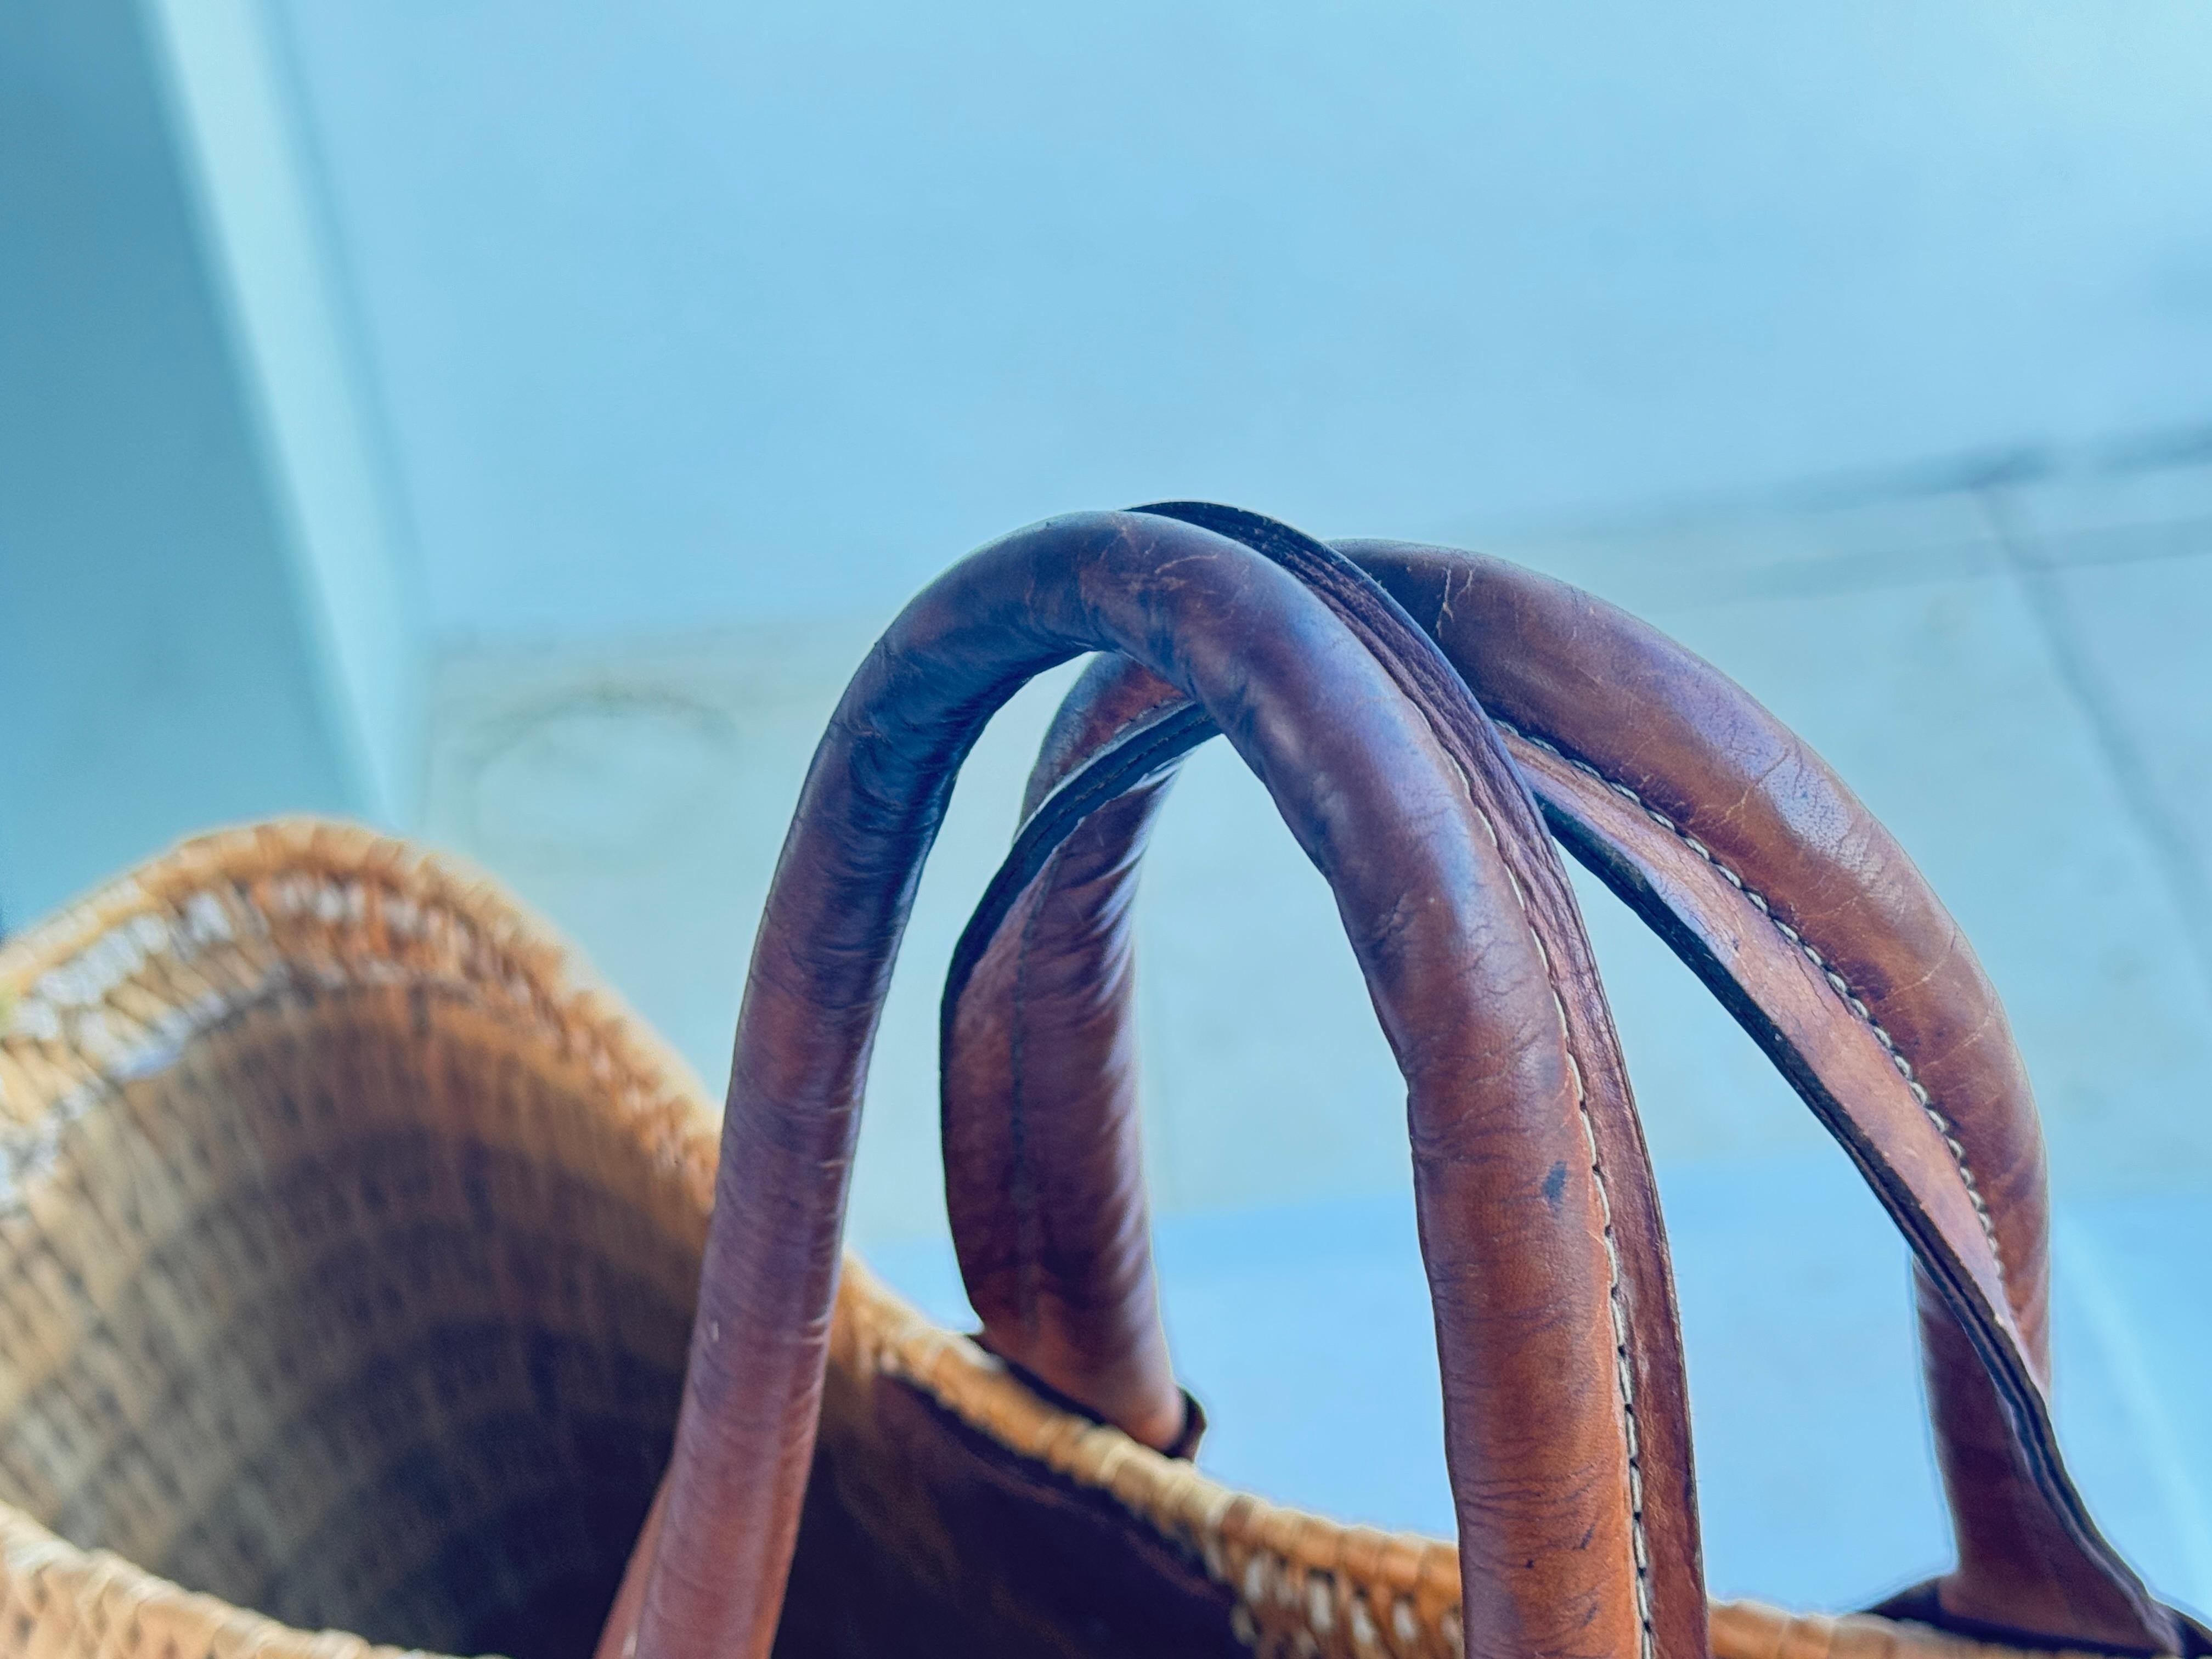 Vintage French Wicker Basket, Gold Color Stitched Leather Bag Handles France For Sale 2